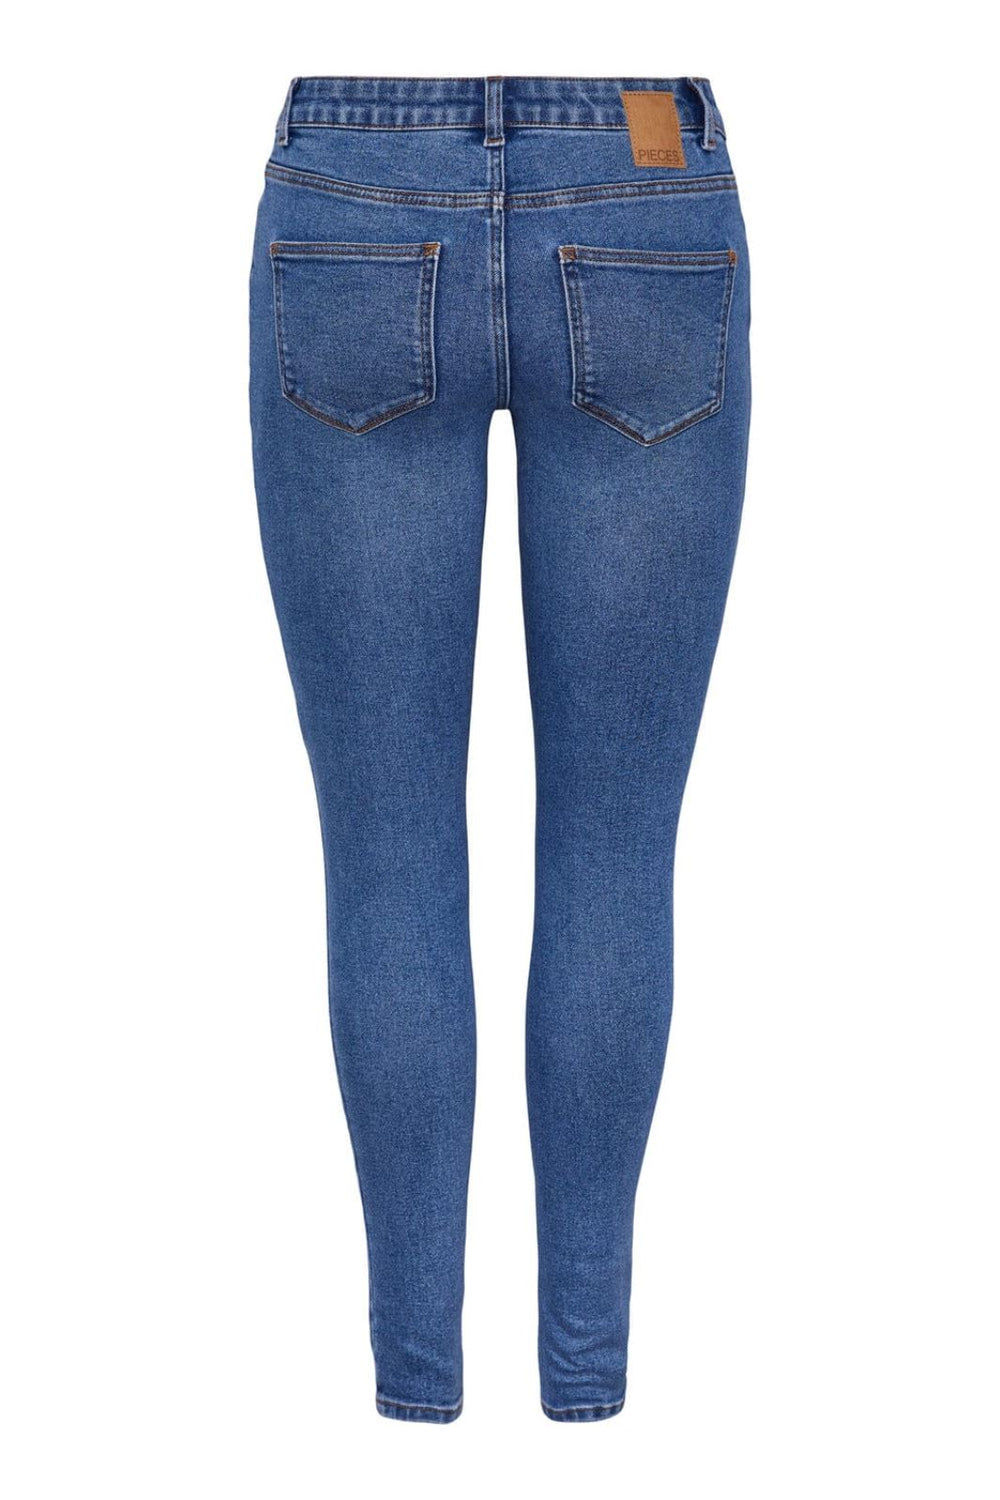 Pieces X Ditte Estrup - Pcdana Mwst Skinny Jeans Mb402 - 4438579 Medium Blue Denim Jeans 